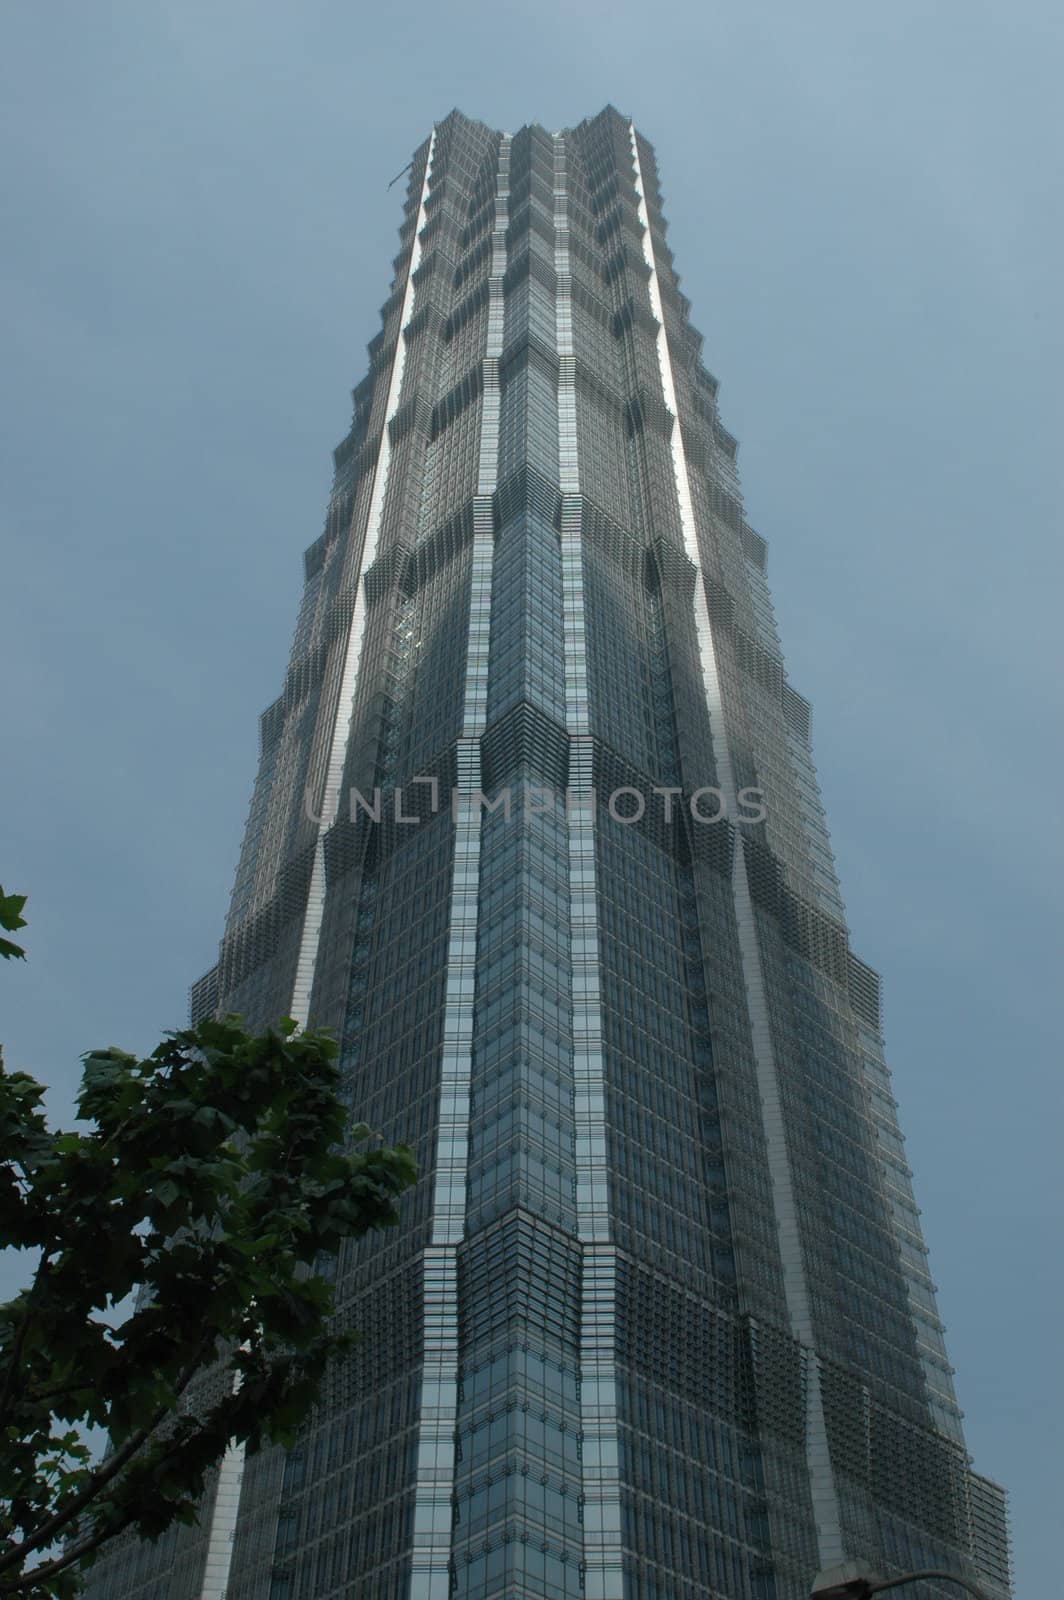 Highest building in Shanghai by bartekchiny